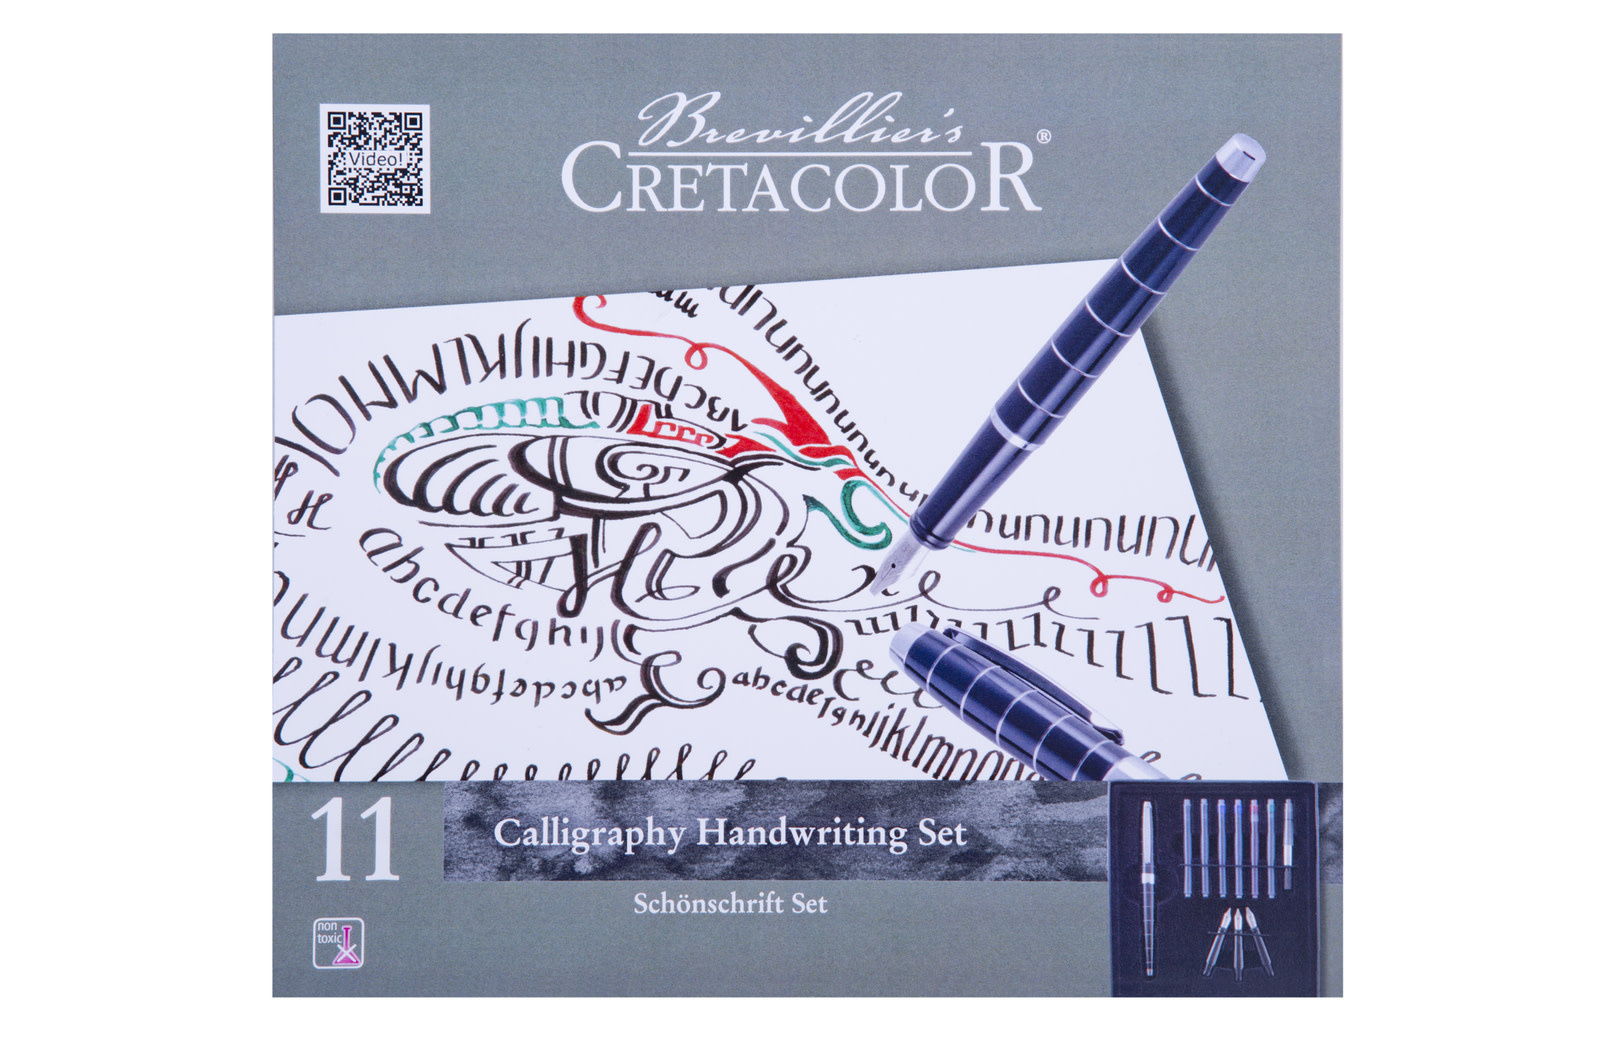 Cretacolor Calligraphy Writing Set, 11 Piece